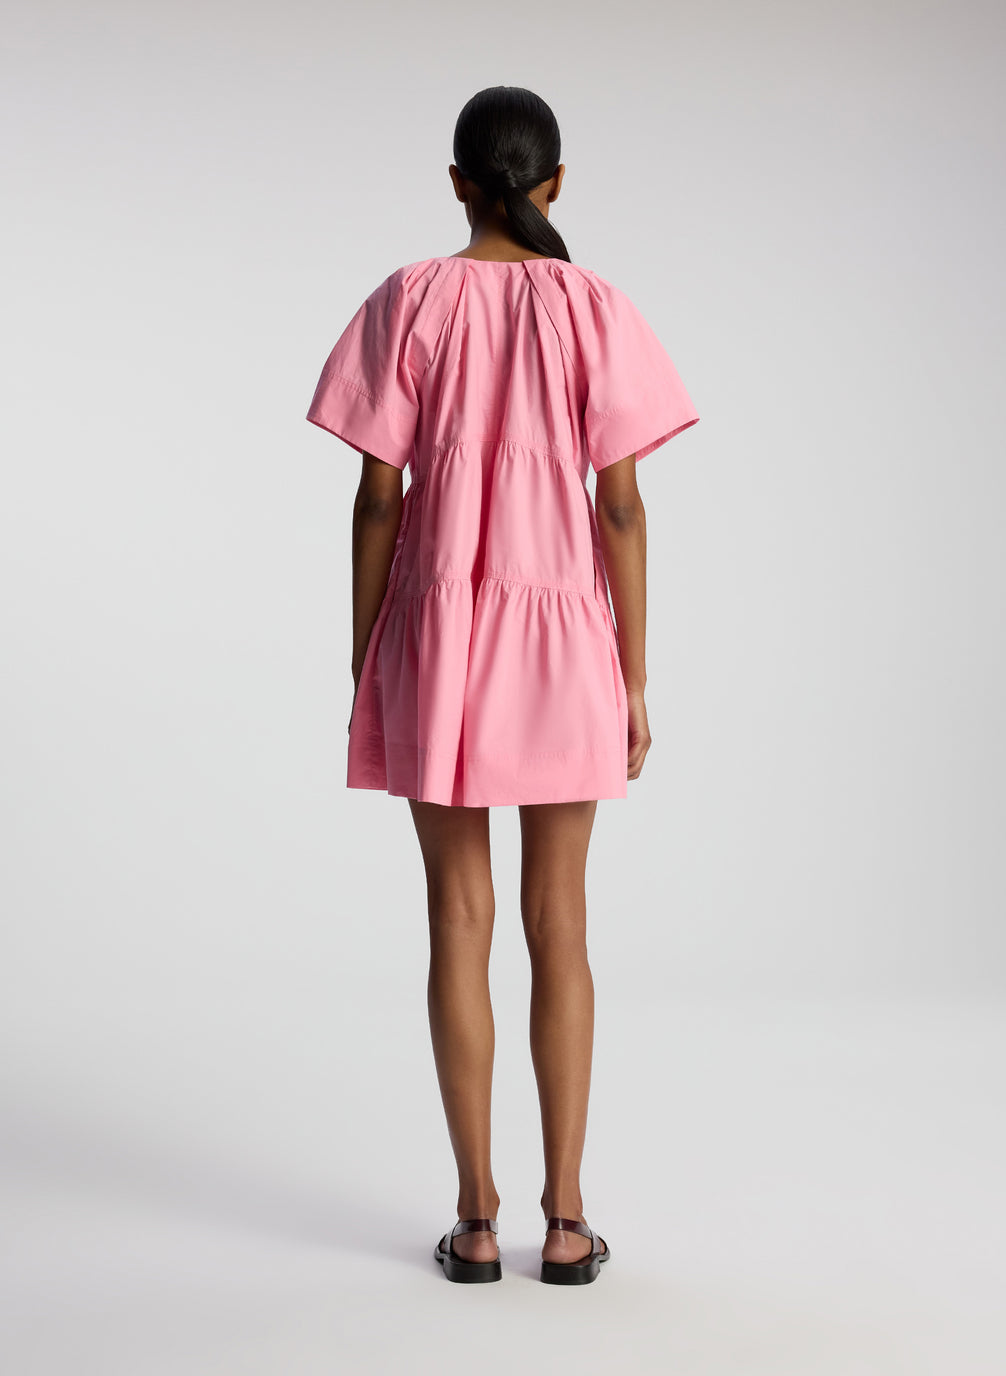 back view of woman wearing pink short sleeve minidress